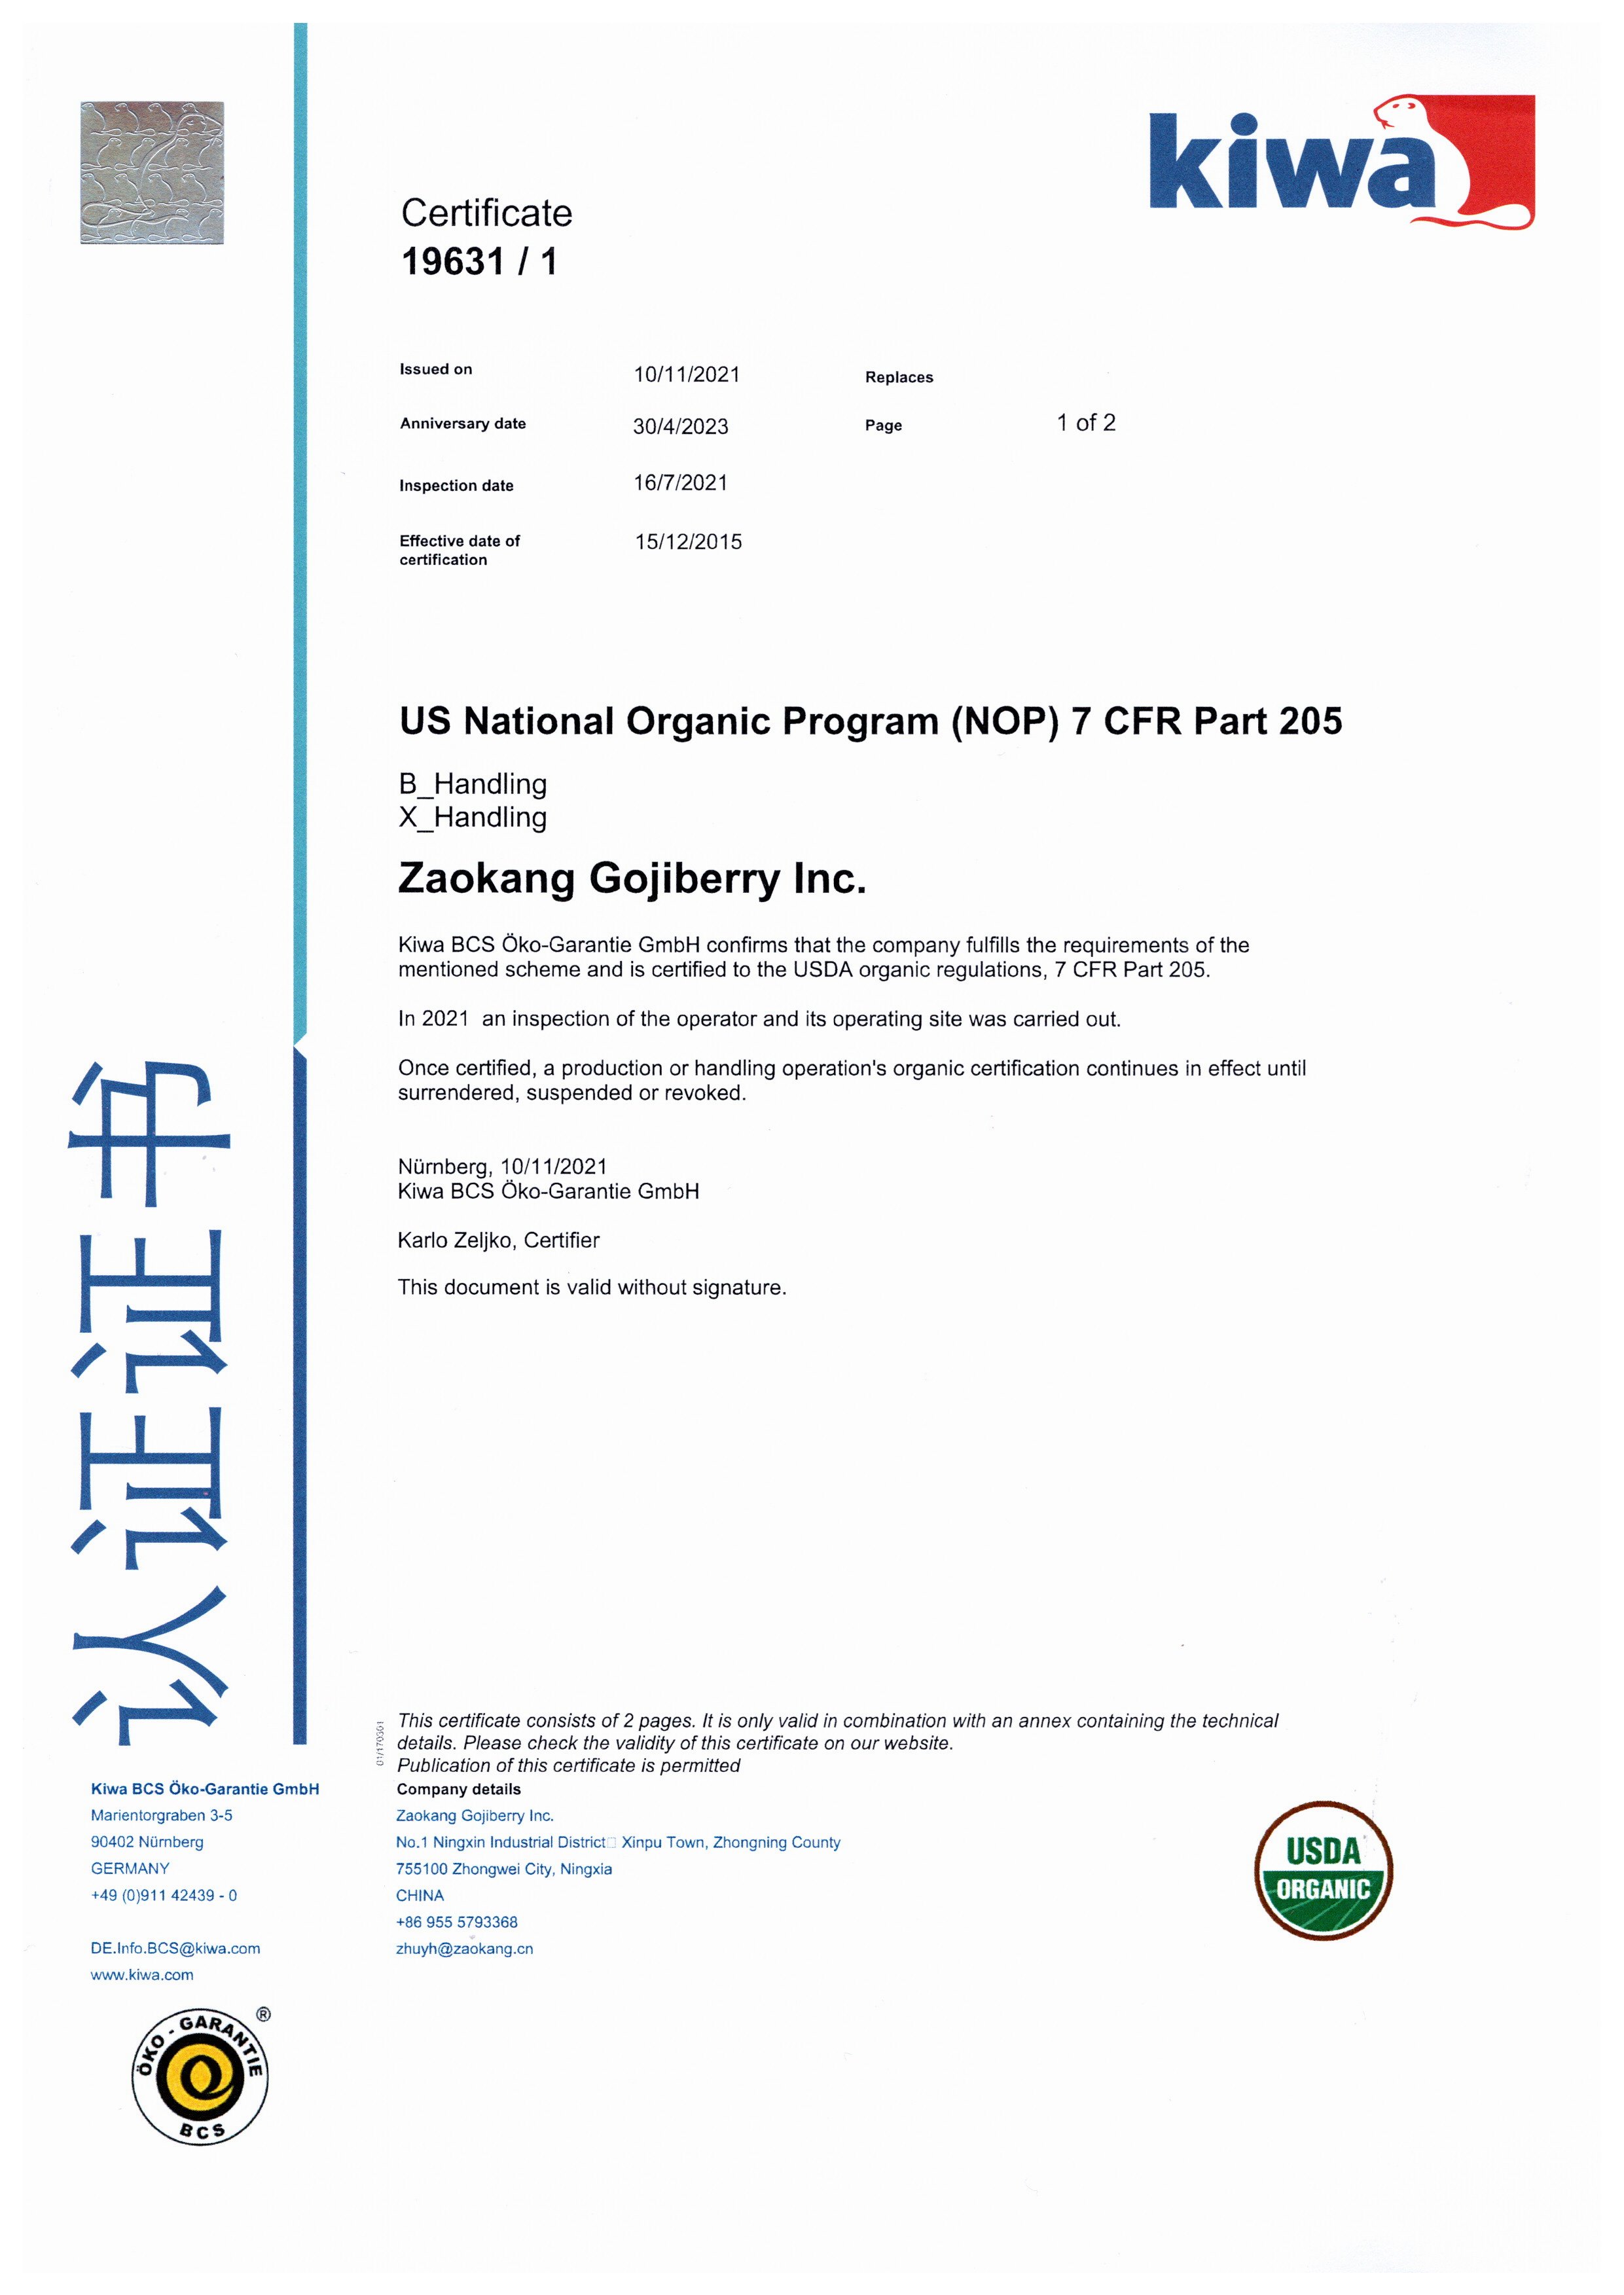 USDA organic certificate